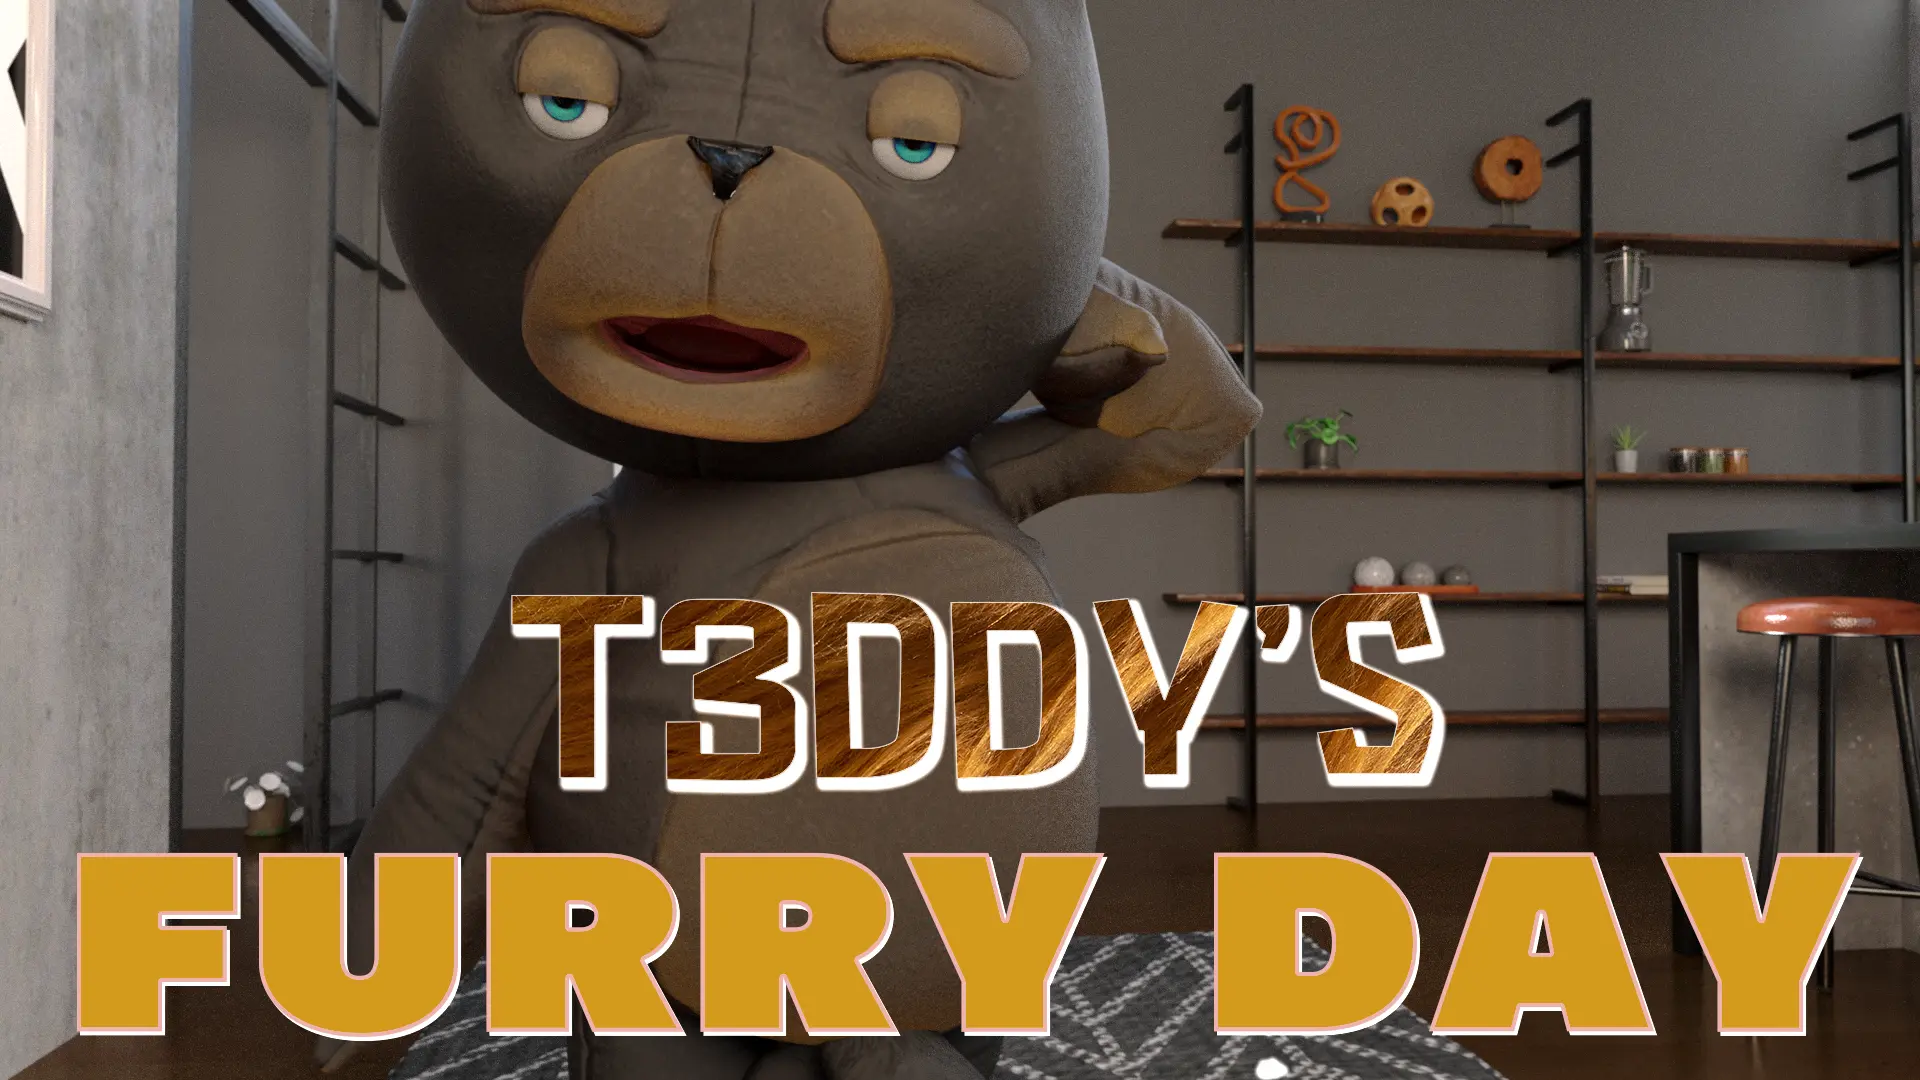 Teddys Furry Day main image